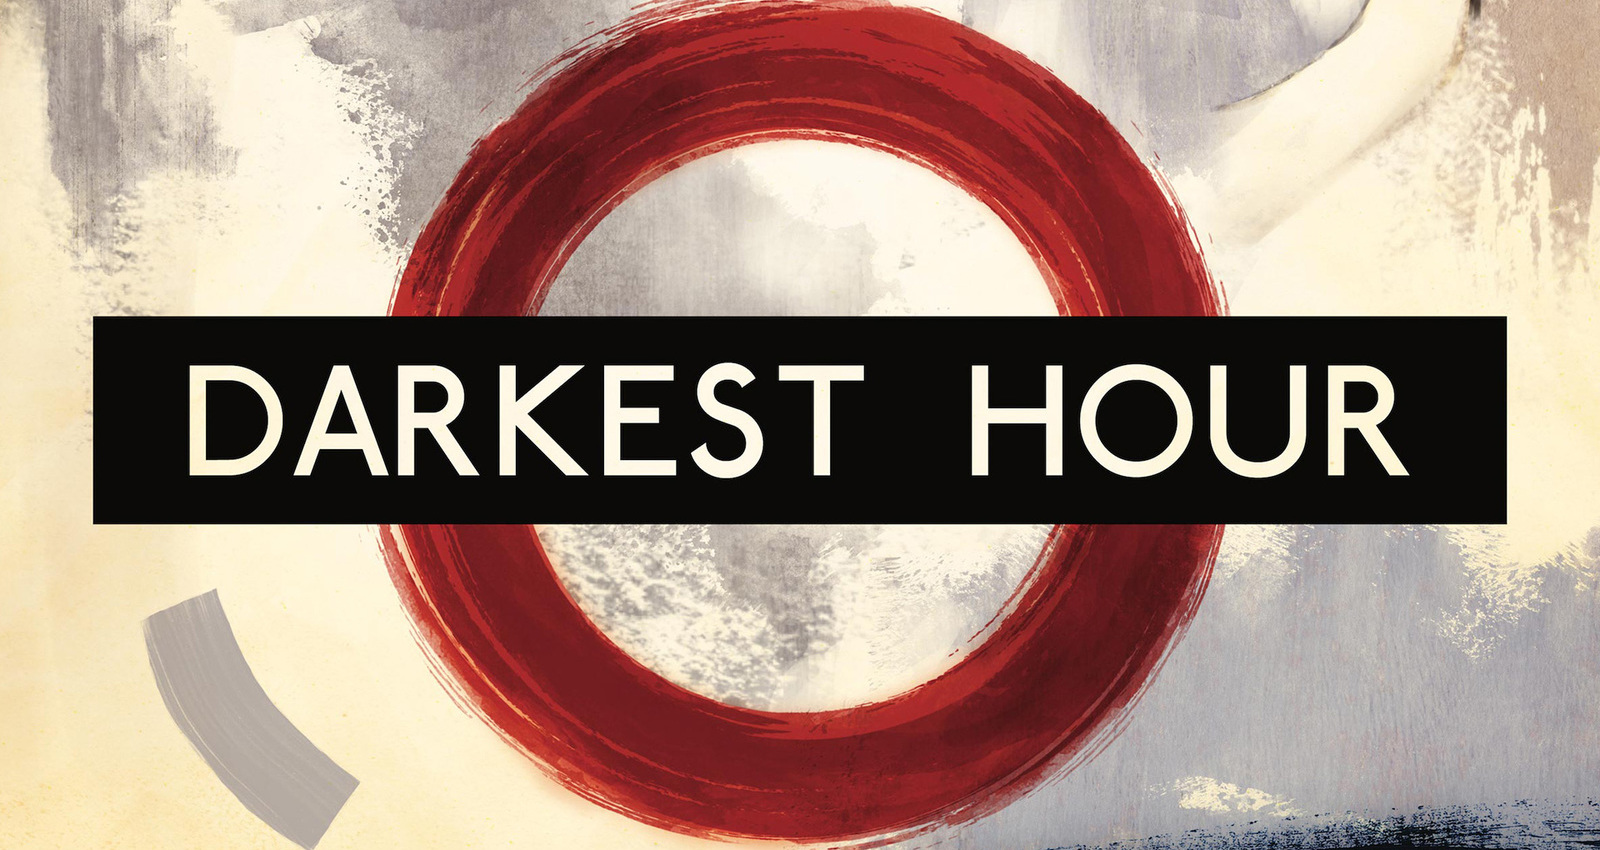 Darkest Hour- Shutterstock Oscar Pop Poster Series 2018